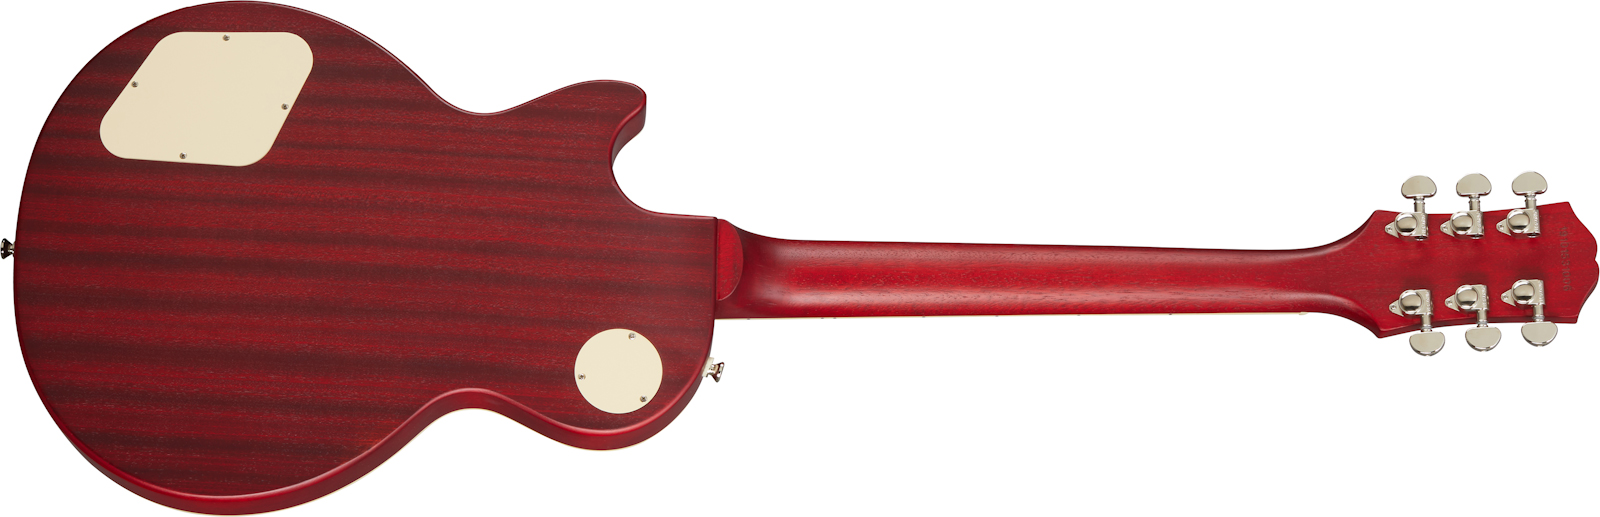 Epiphone Les Paul Classic Worn 2020 Hh Ht Rw - Worn Heritage Cherry Sunburst - Single-Cut-E-Gitarre - Variation 1